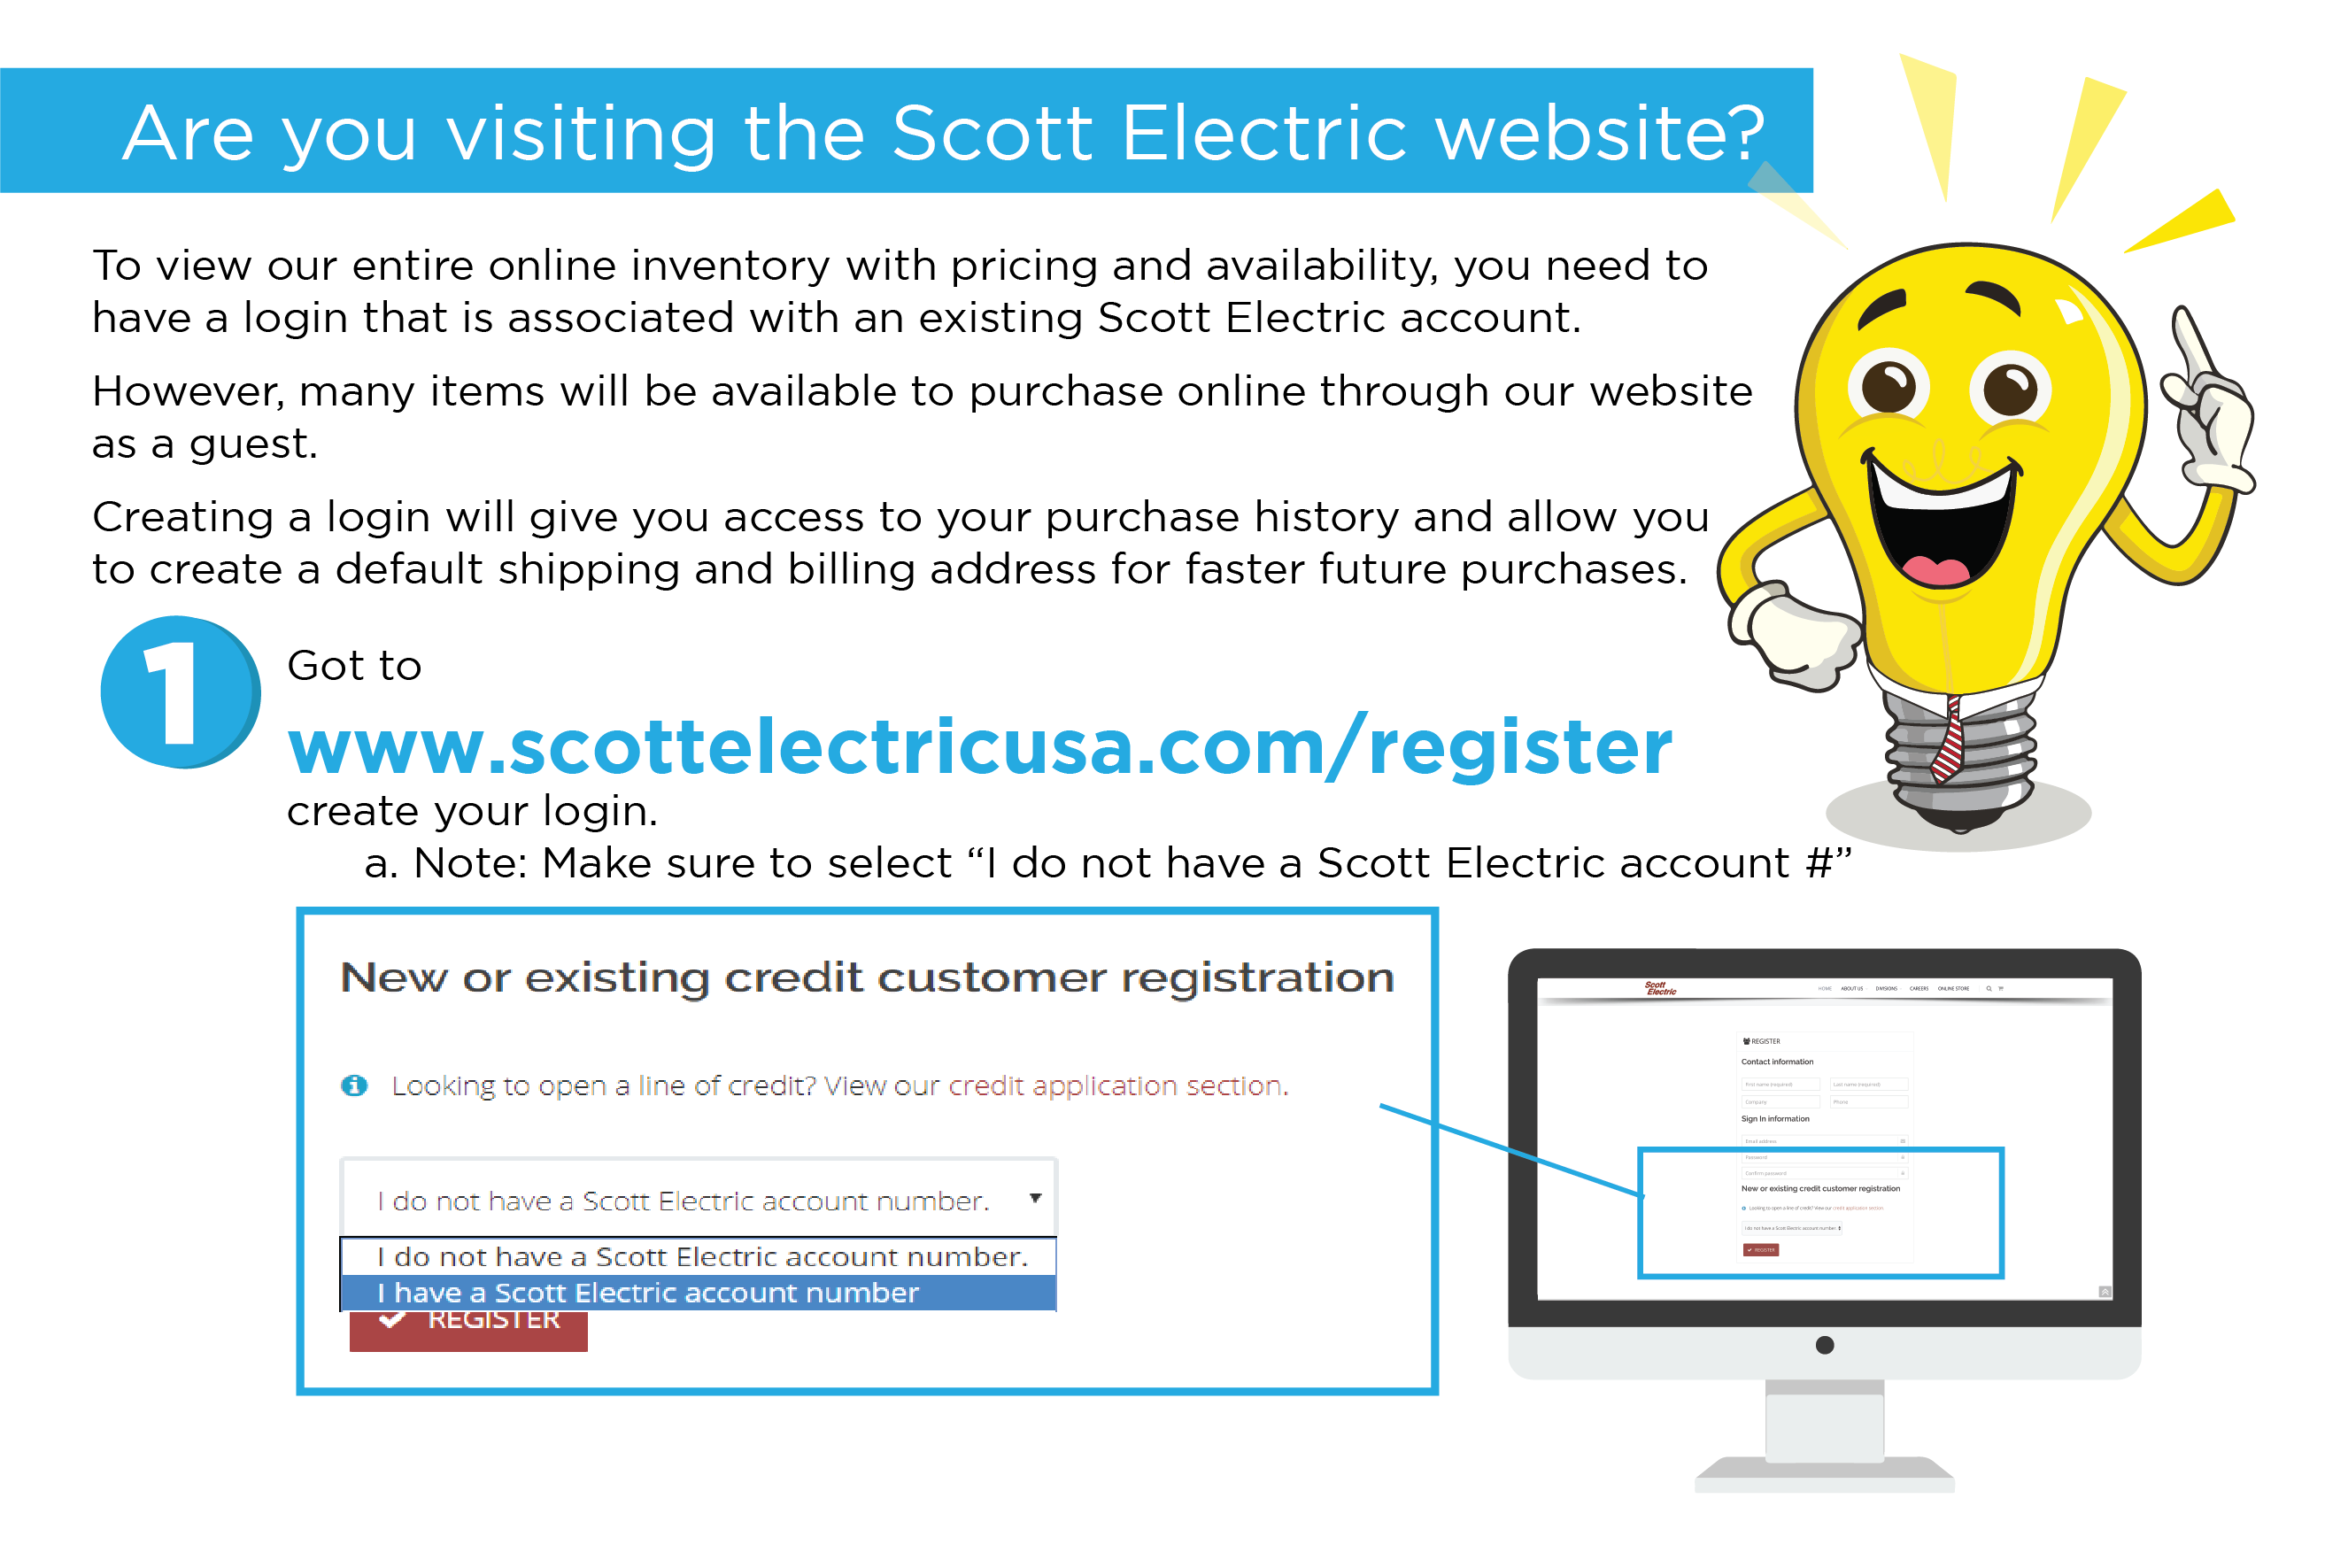 Website Registration Instructions (No Account)